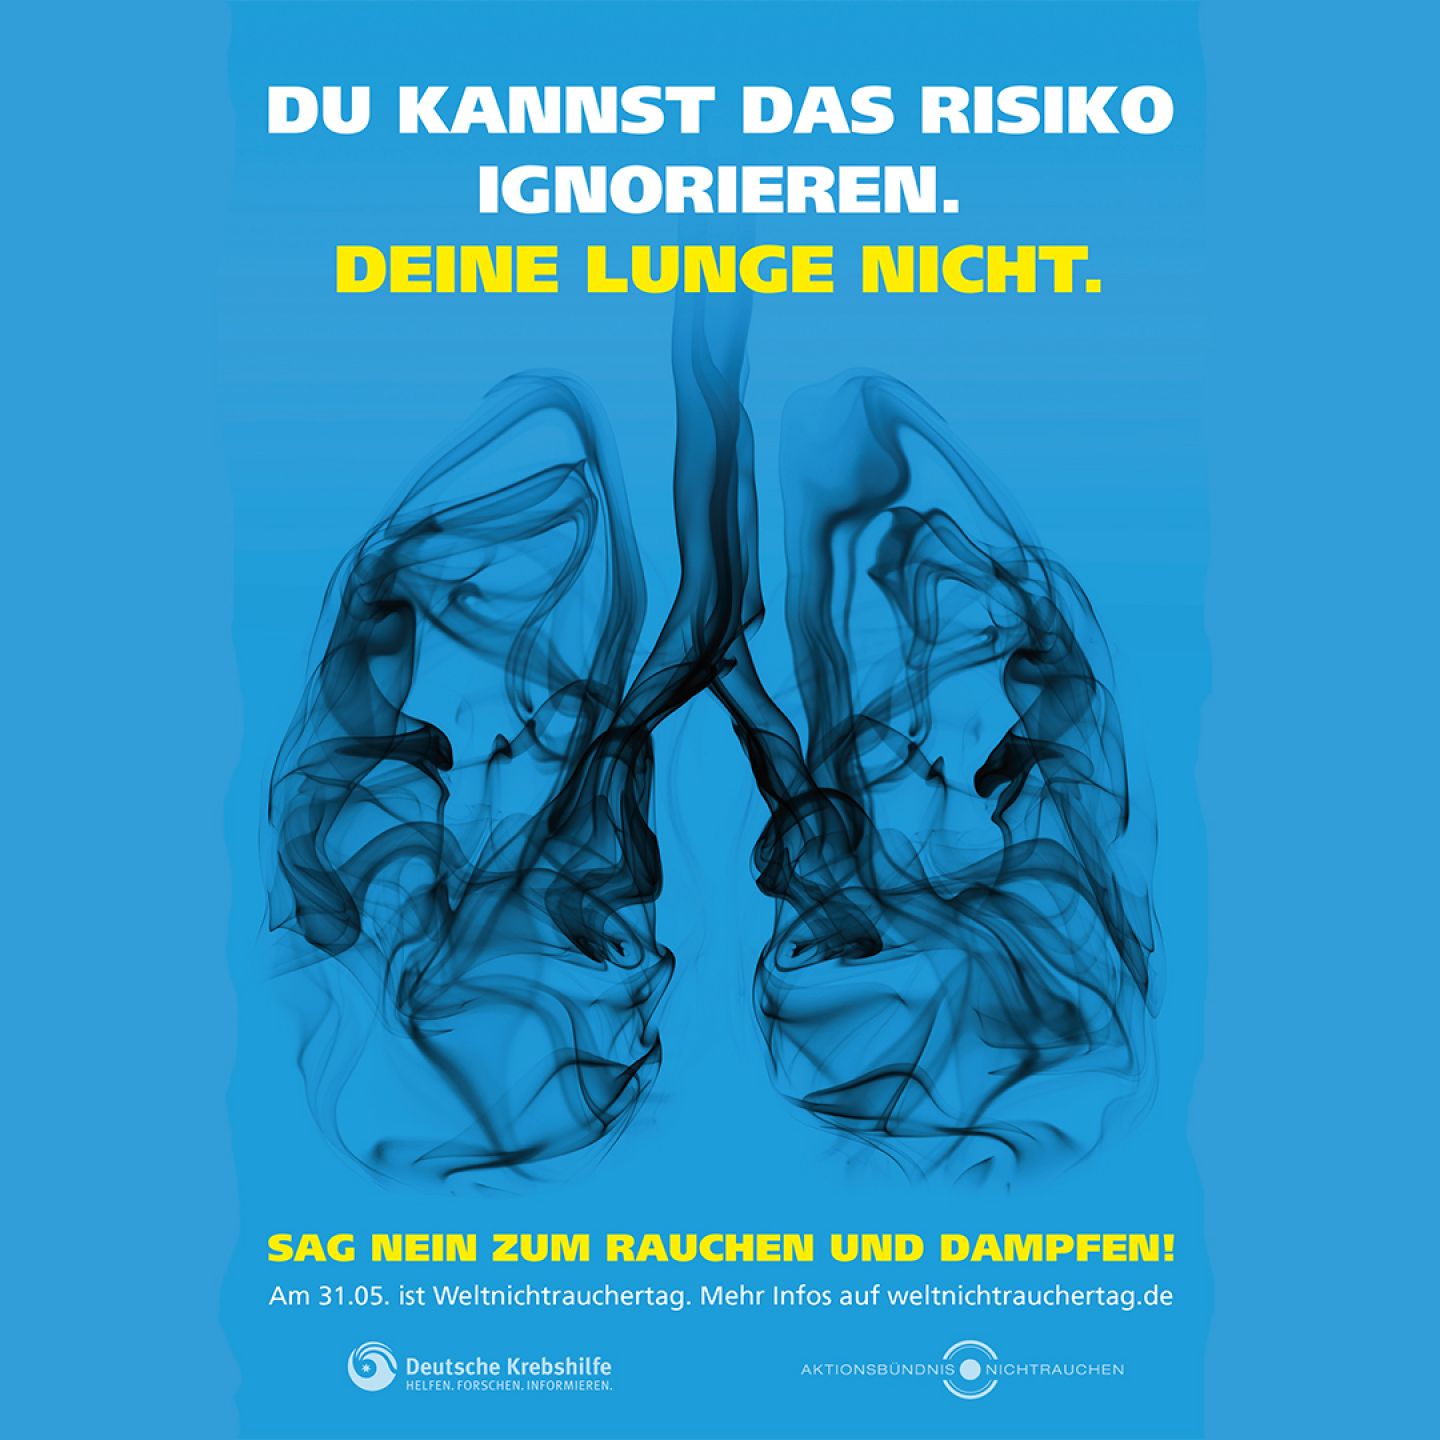 Plakat zum Weltnichtrauchertag 2019 © dkfz.de